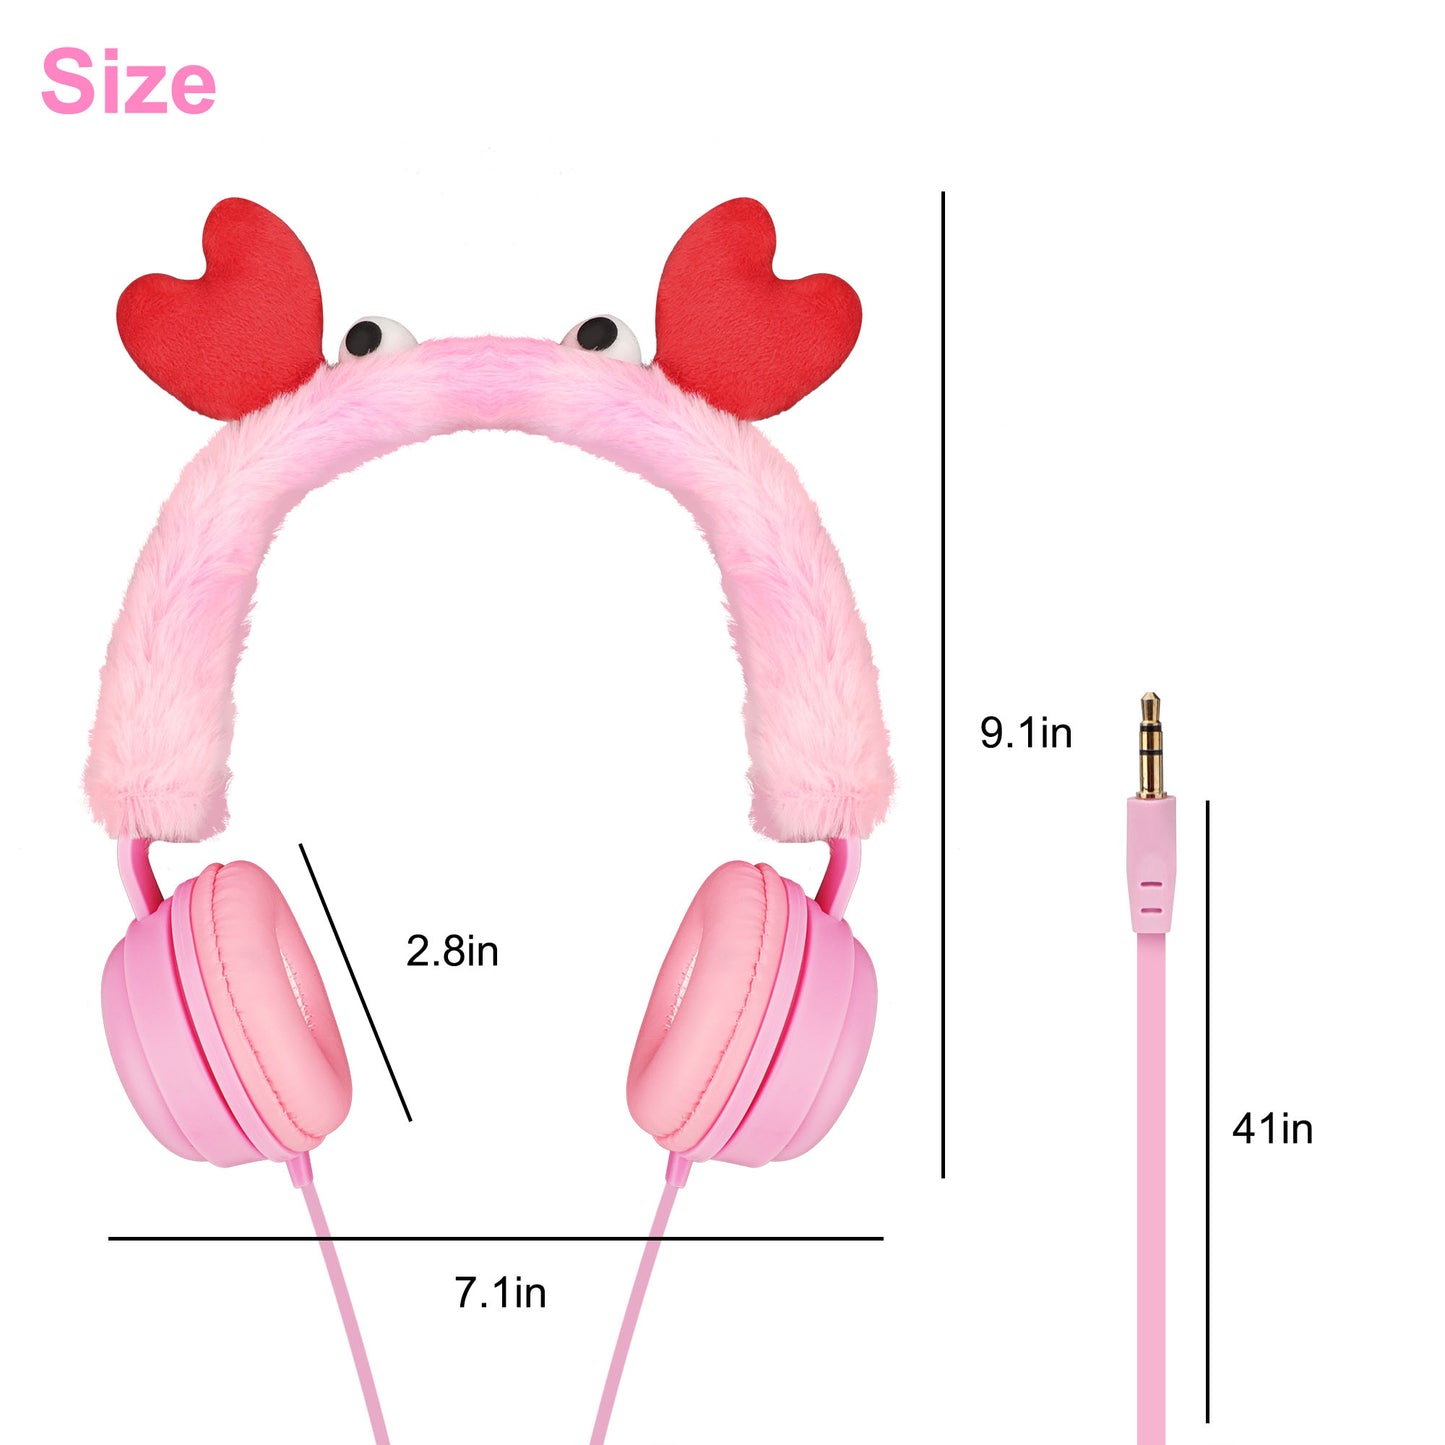 plush Kids Cute Crab Wired headset - Cartoon headphones animal Ear Headphones with Adjustable Headband,best for School Travel Birthday Gifts